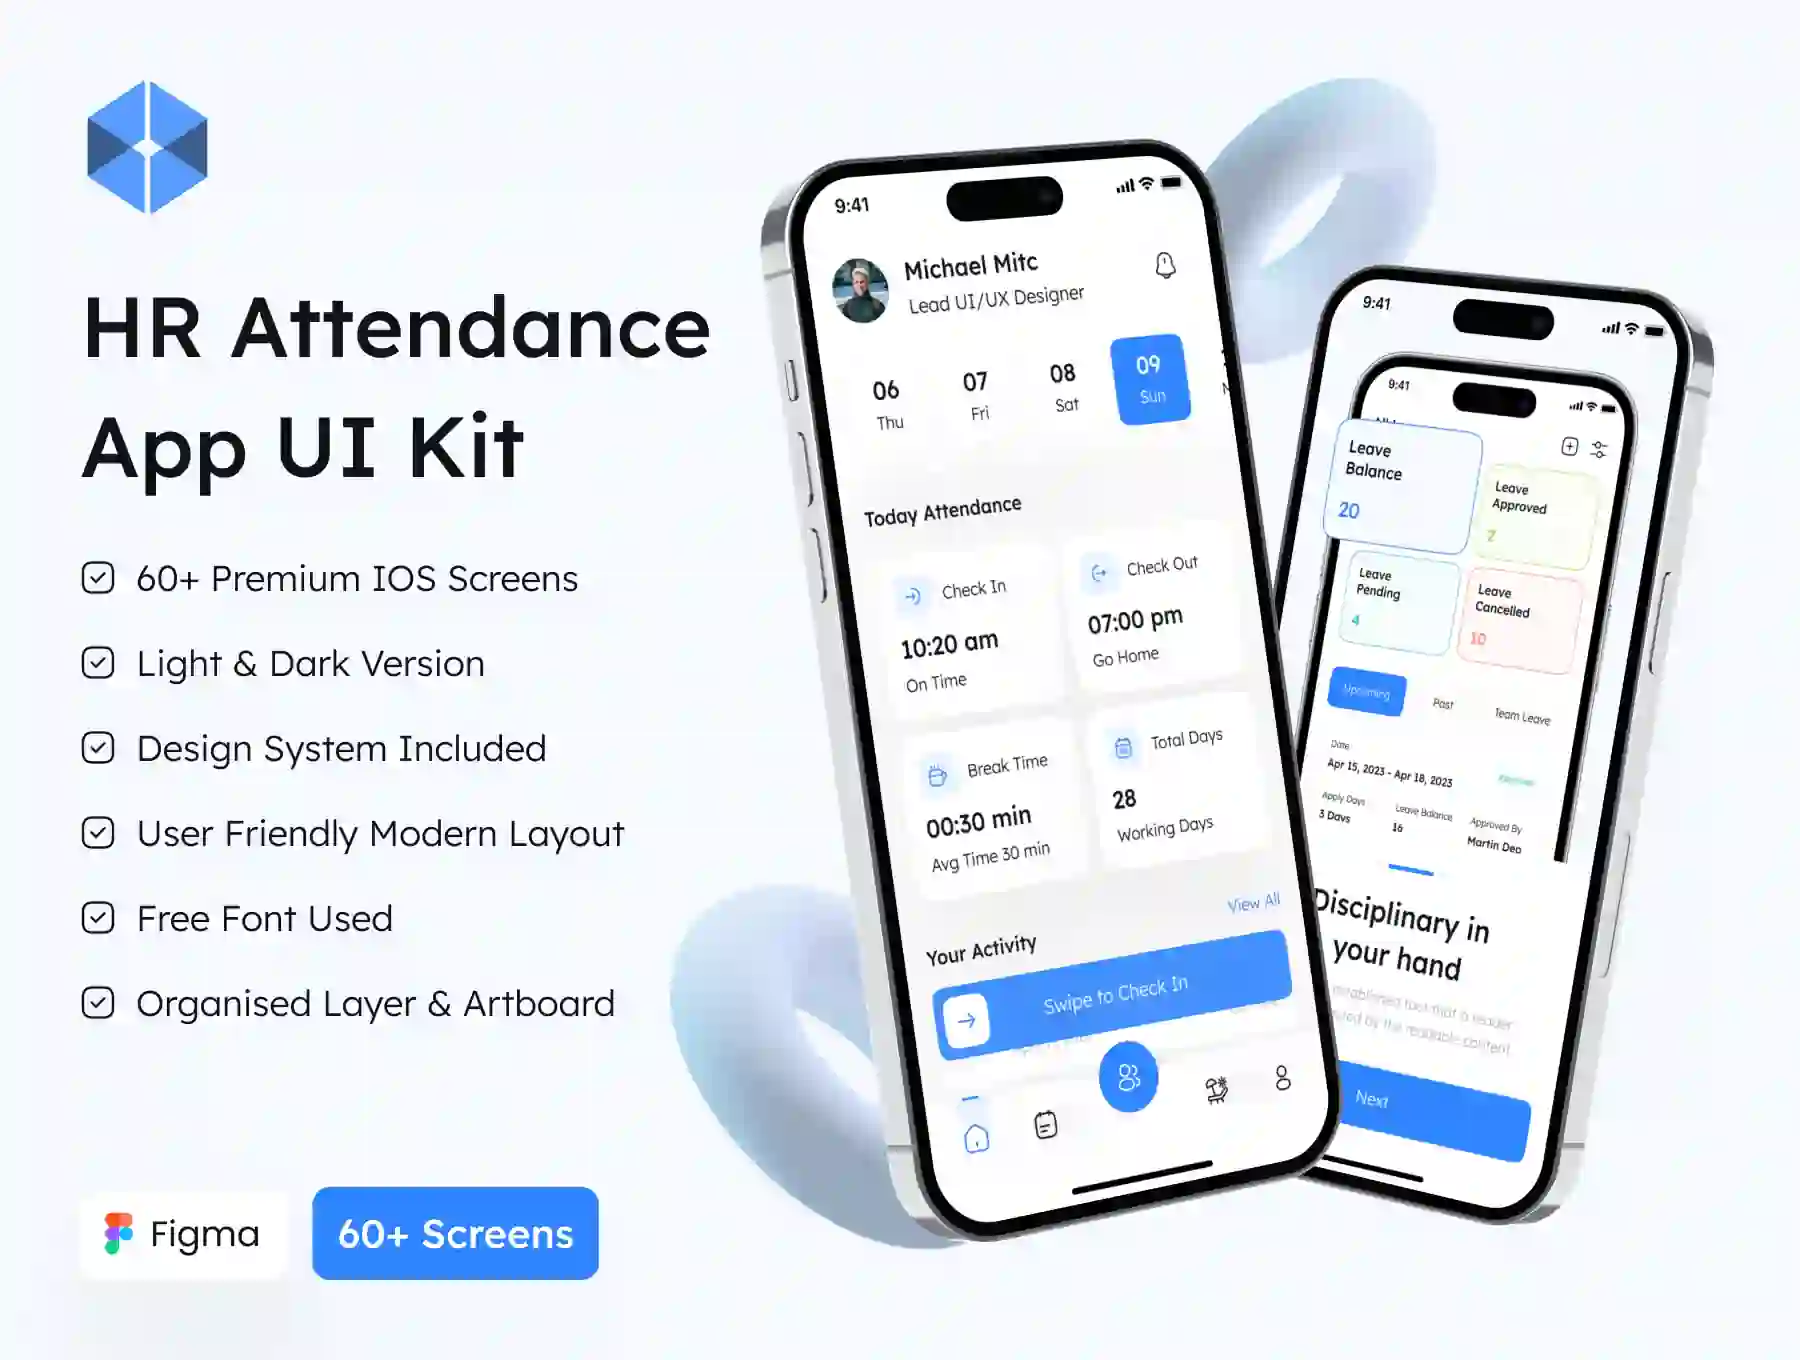 HR Attendance App UI Kit